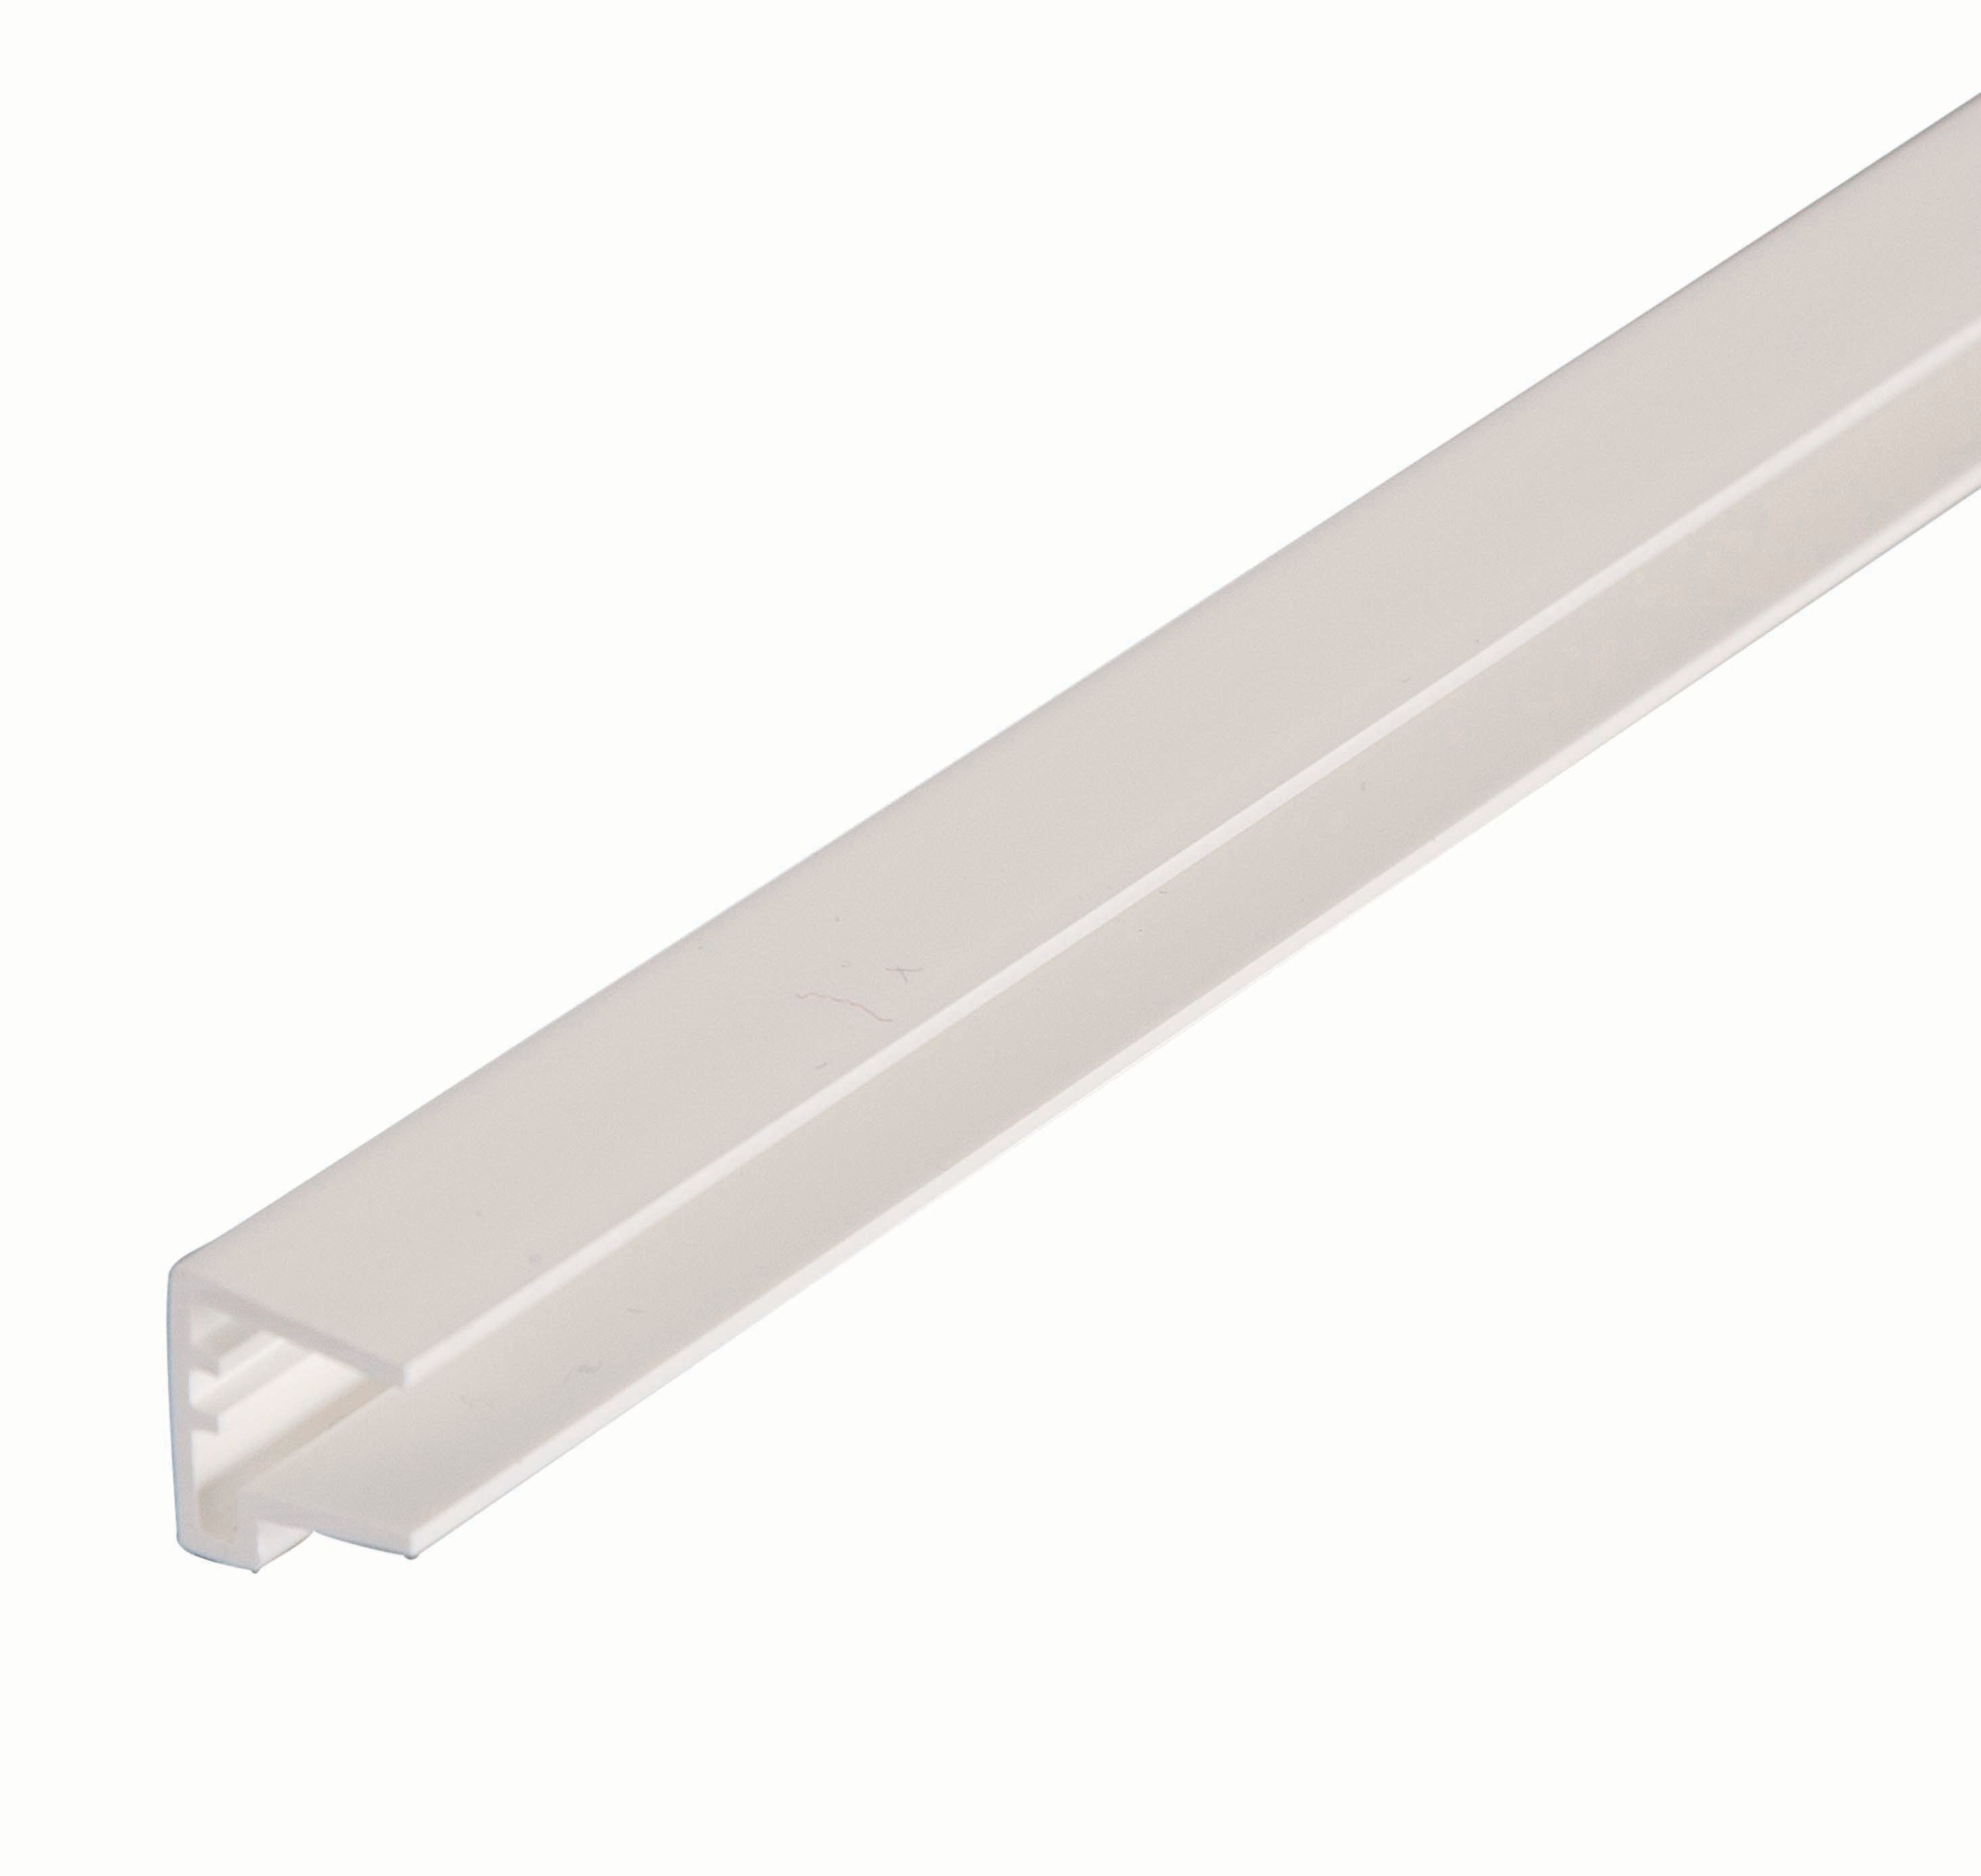 10mm PVC Sheet Closure - White 2.1m